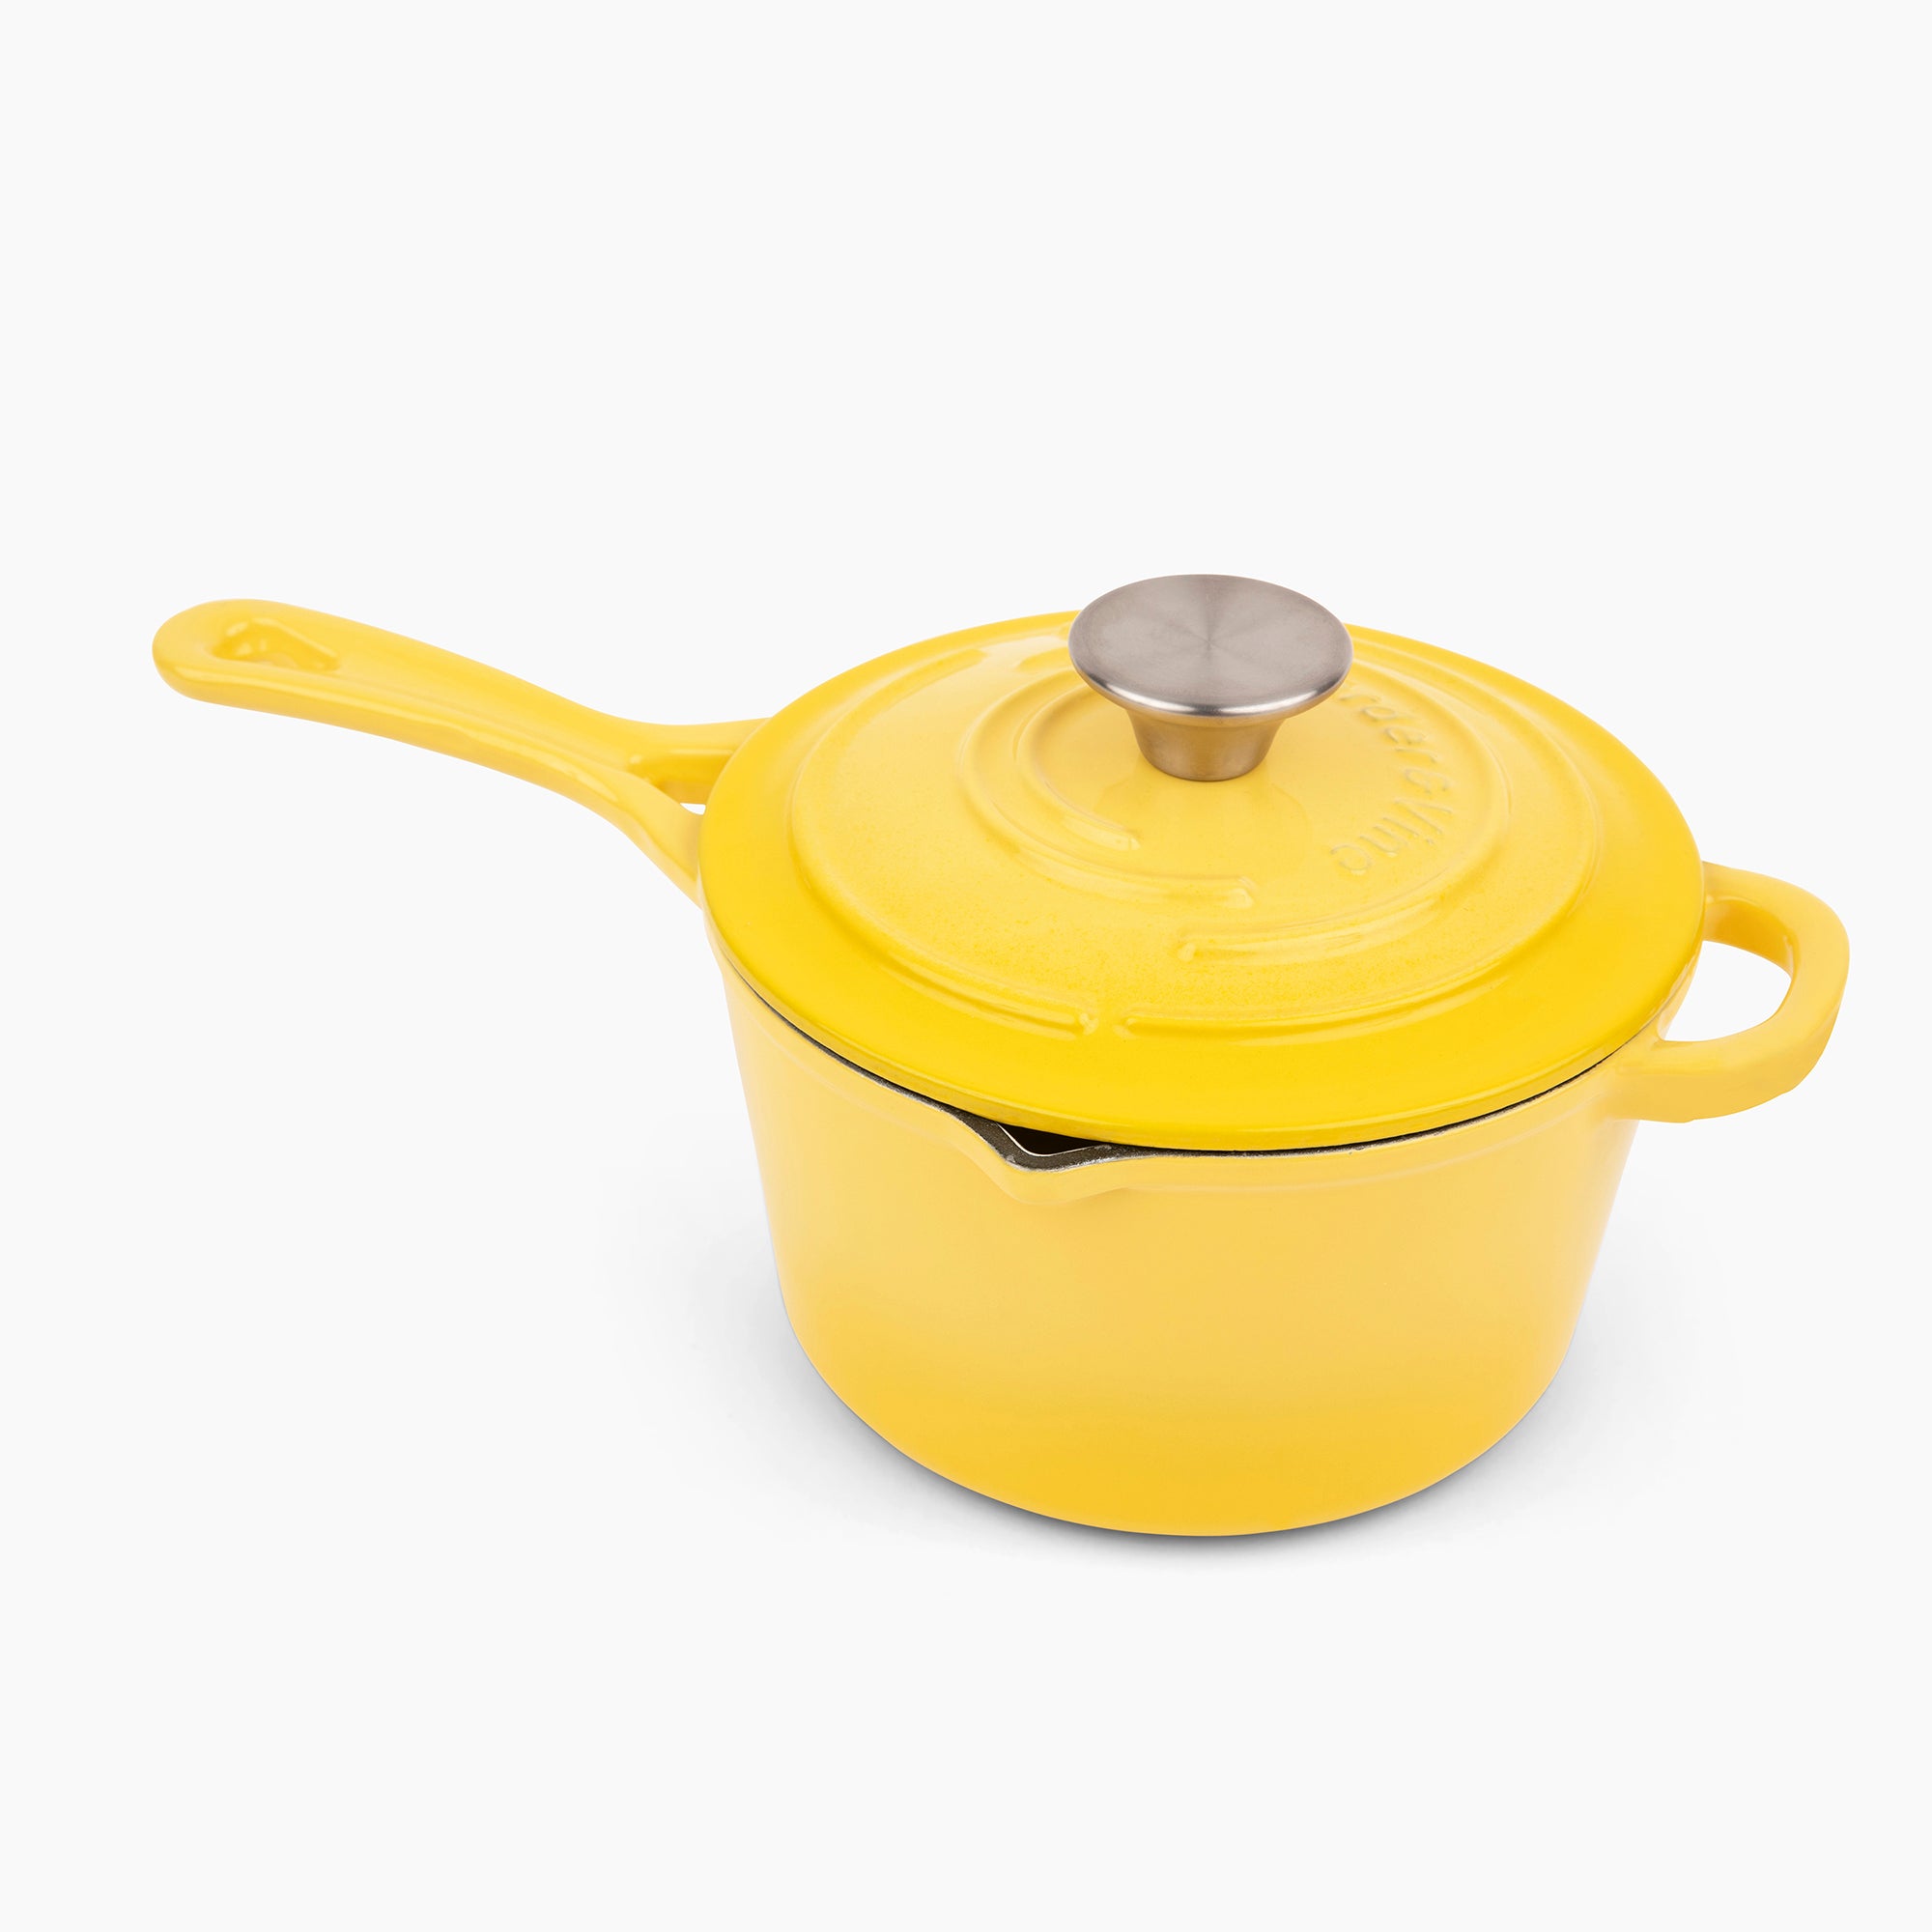 STP Goods Cute Ducklings Enamel on Steel 1.6-Quart Saucepan w/Lid - White, Yellow